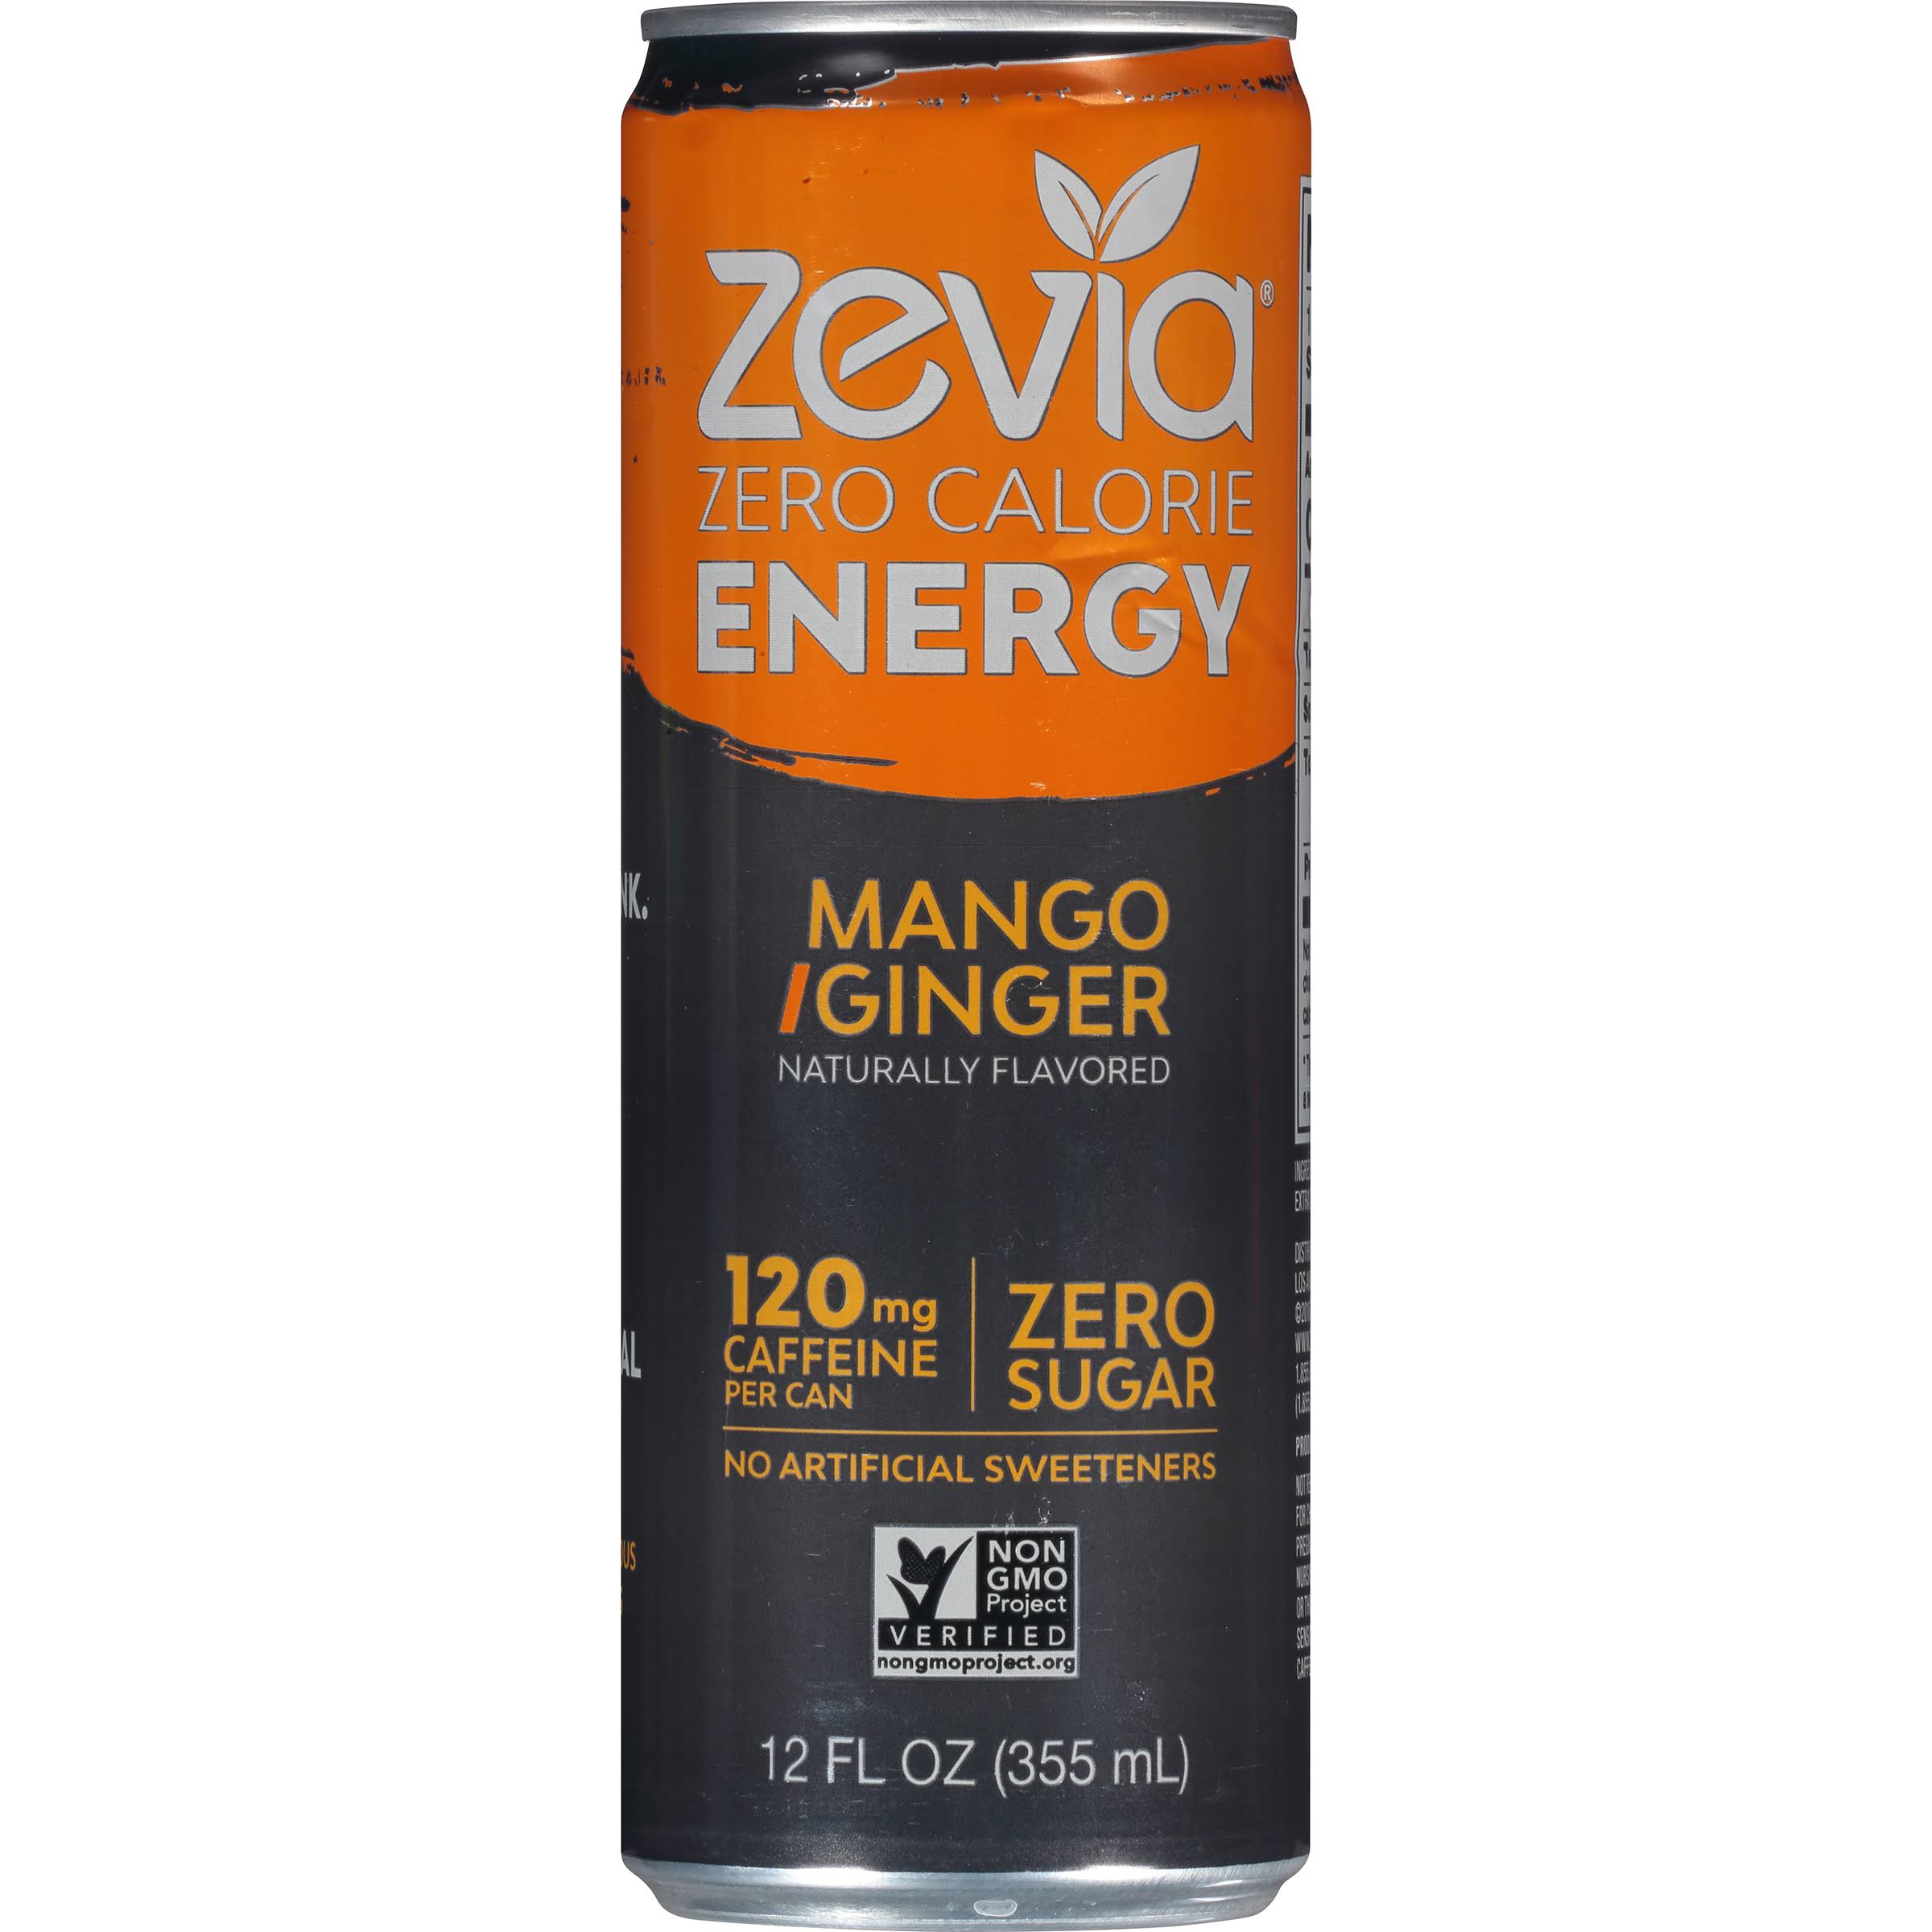 Zevia Zero Calorie Energy Drink, Mango Ginger - 12 oz can